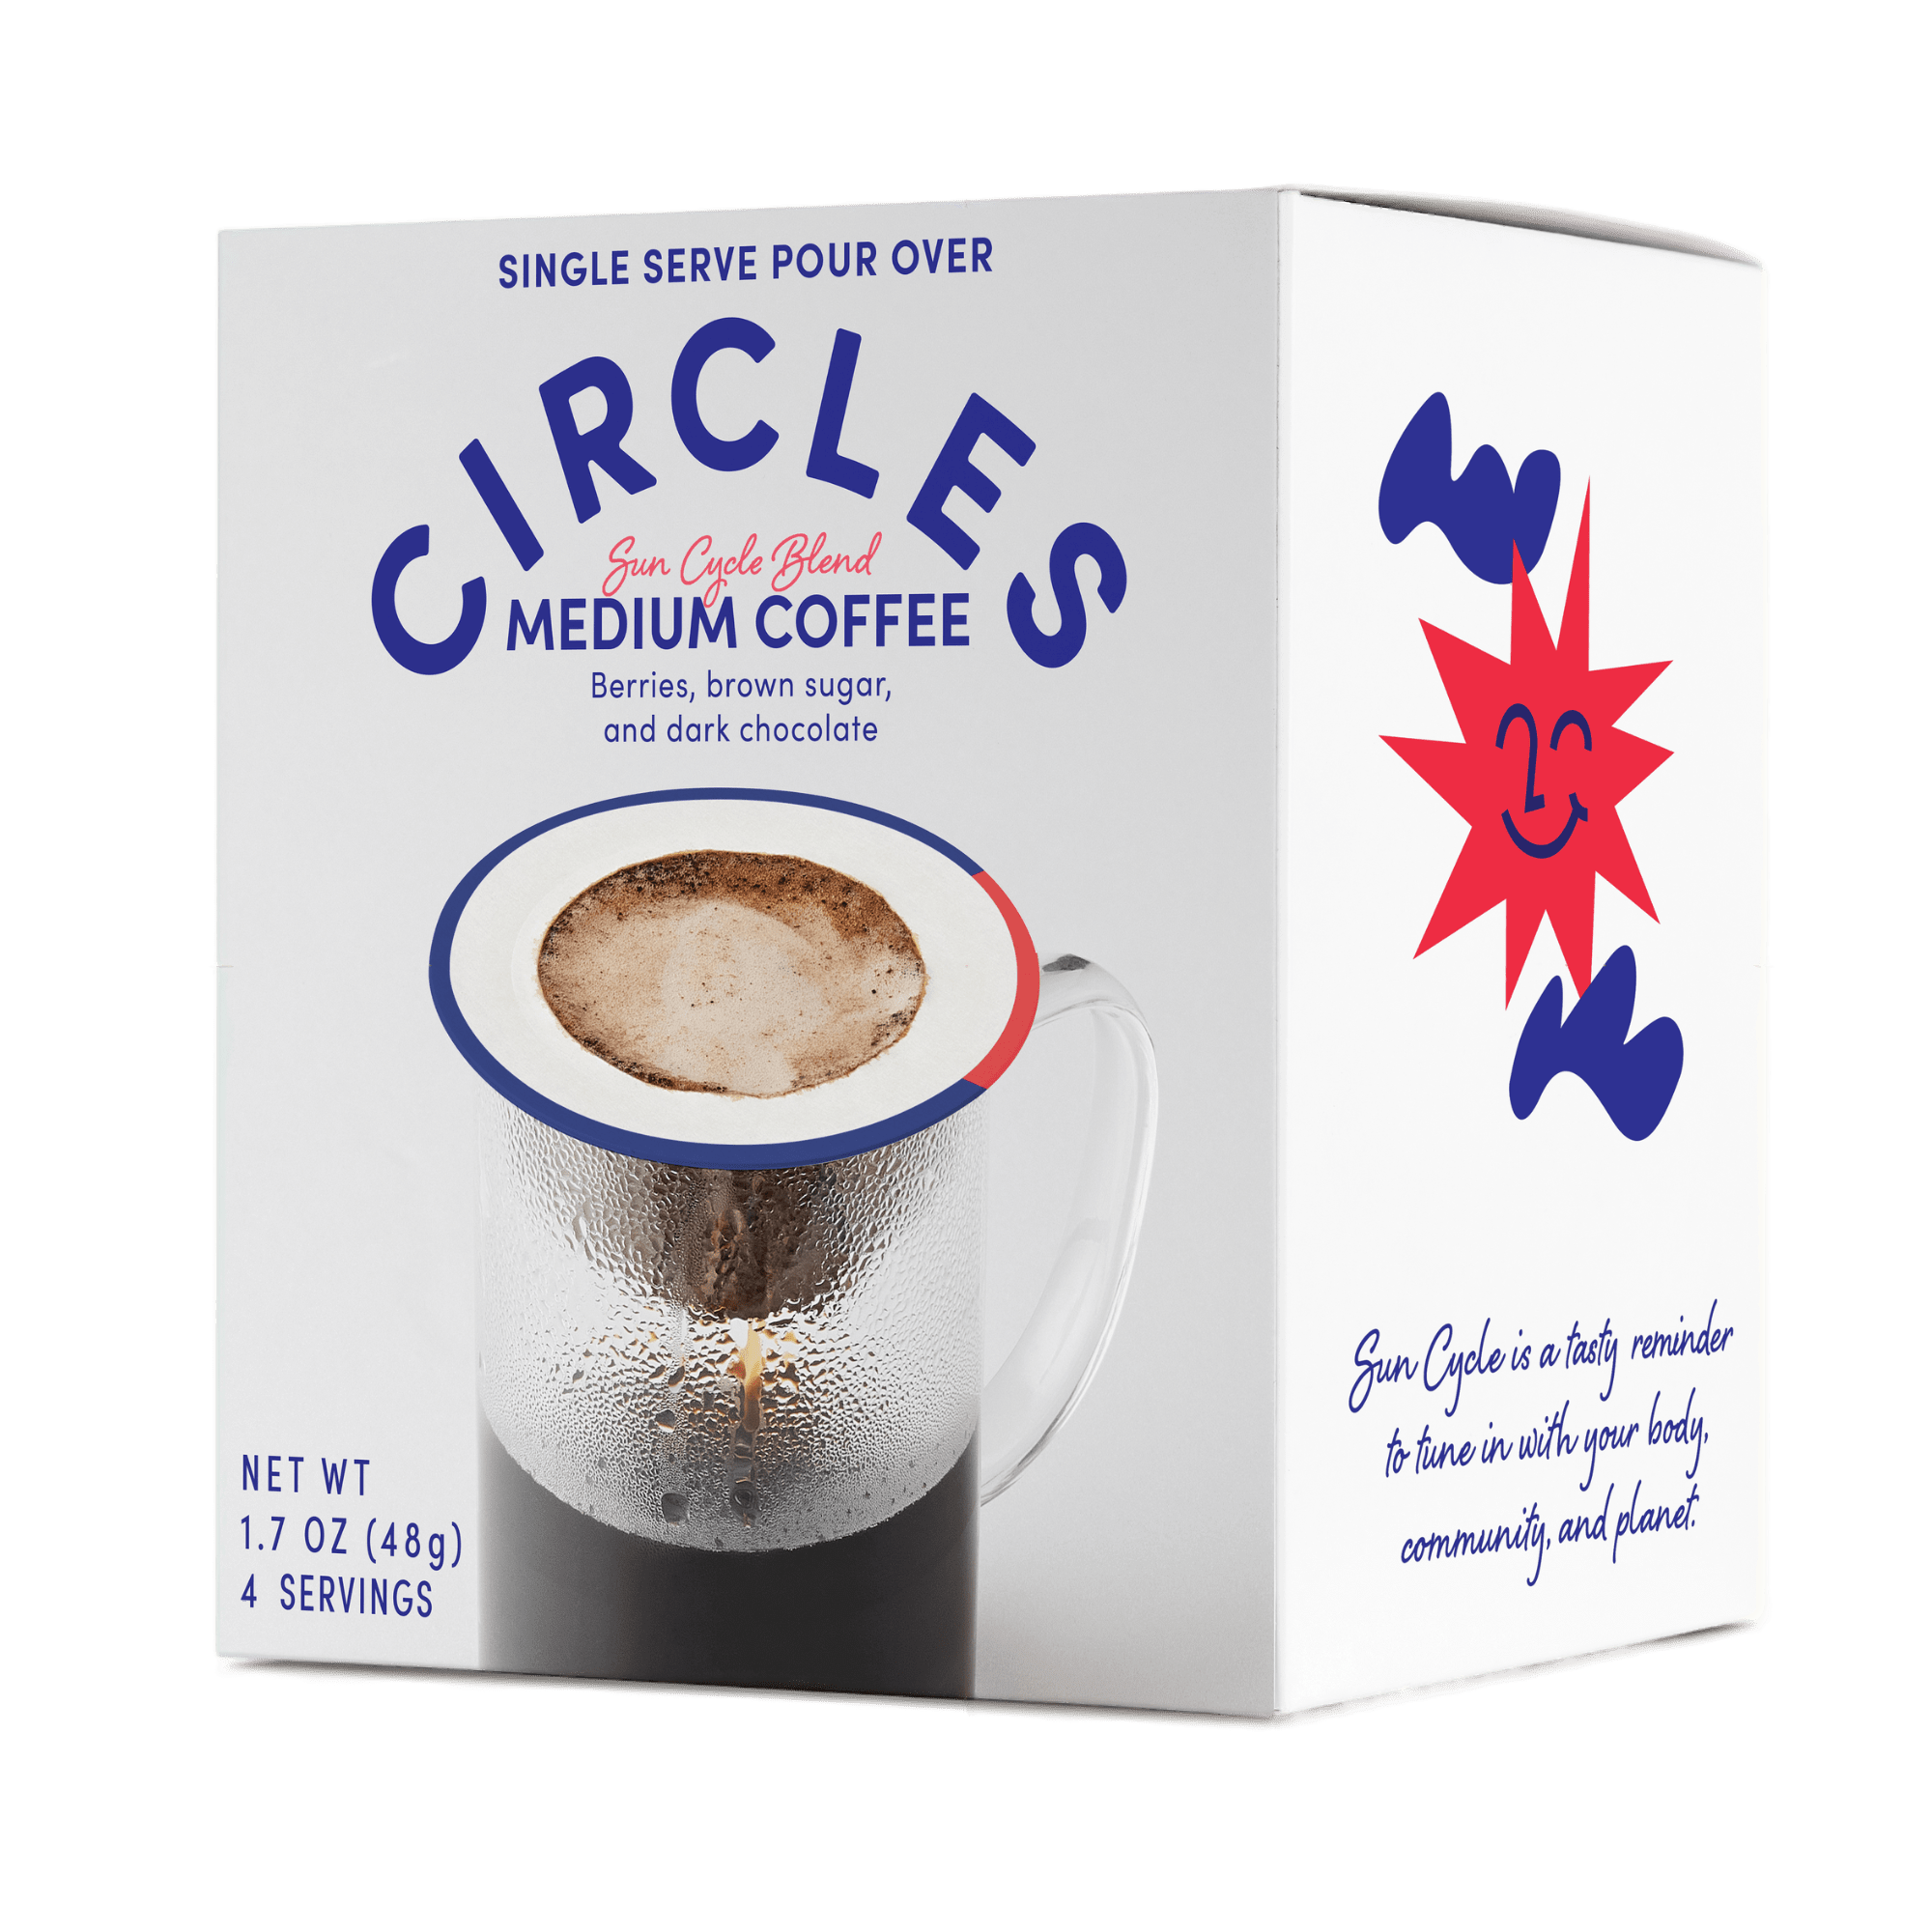 Medium Roast – Circles Coffee